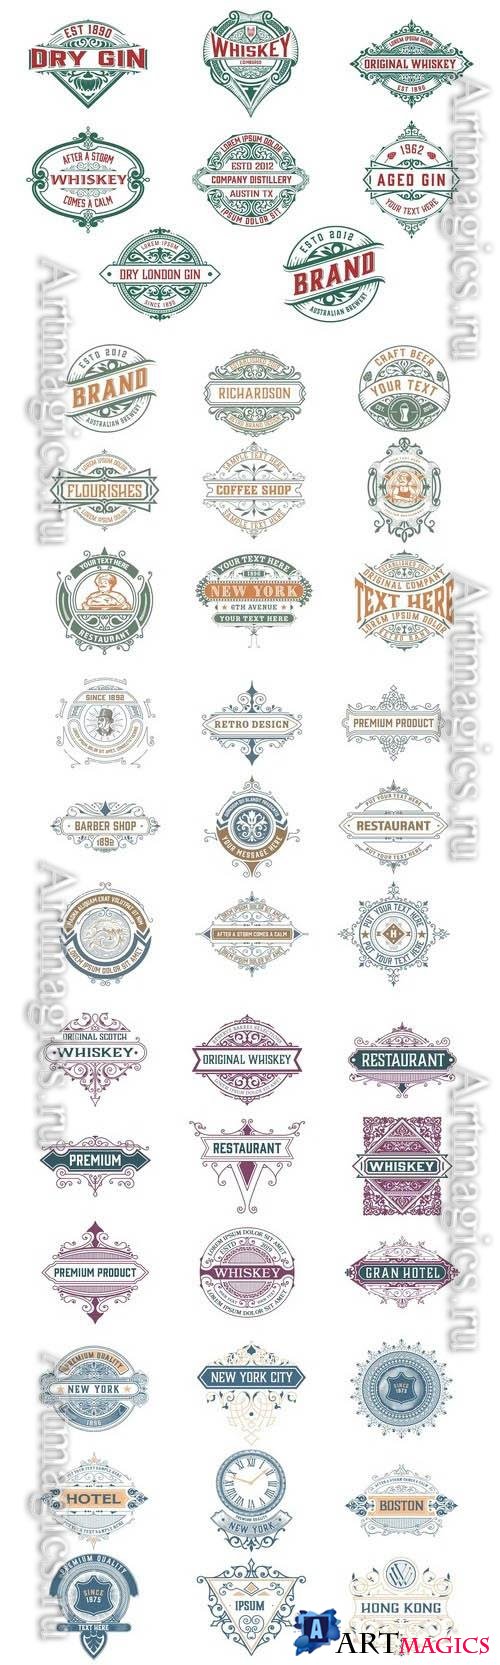 Vintage logos and badges, labels for packing vector set vol 1